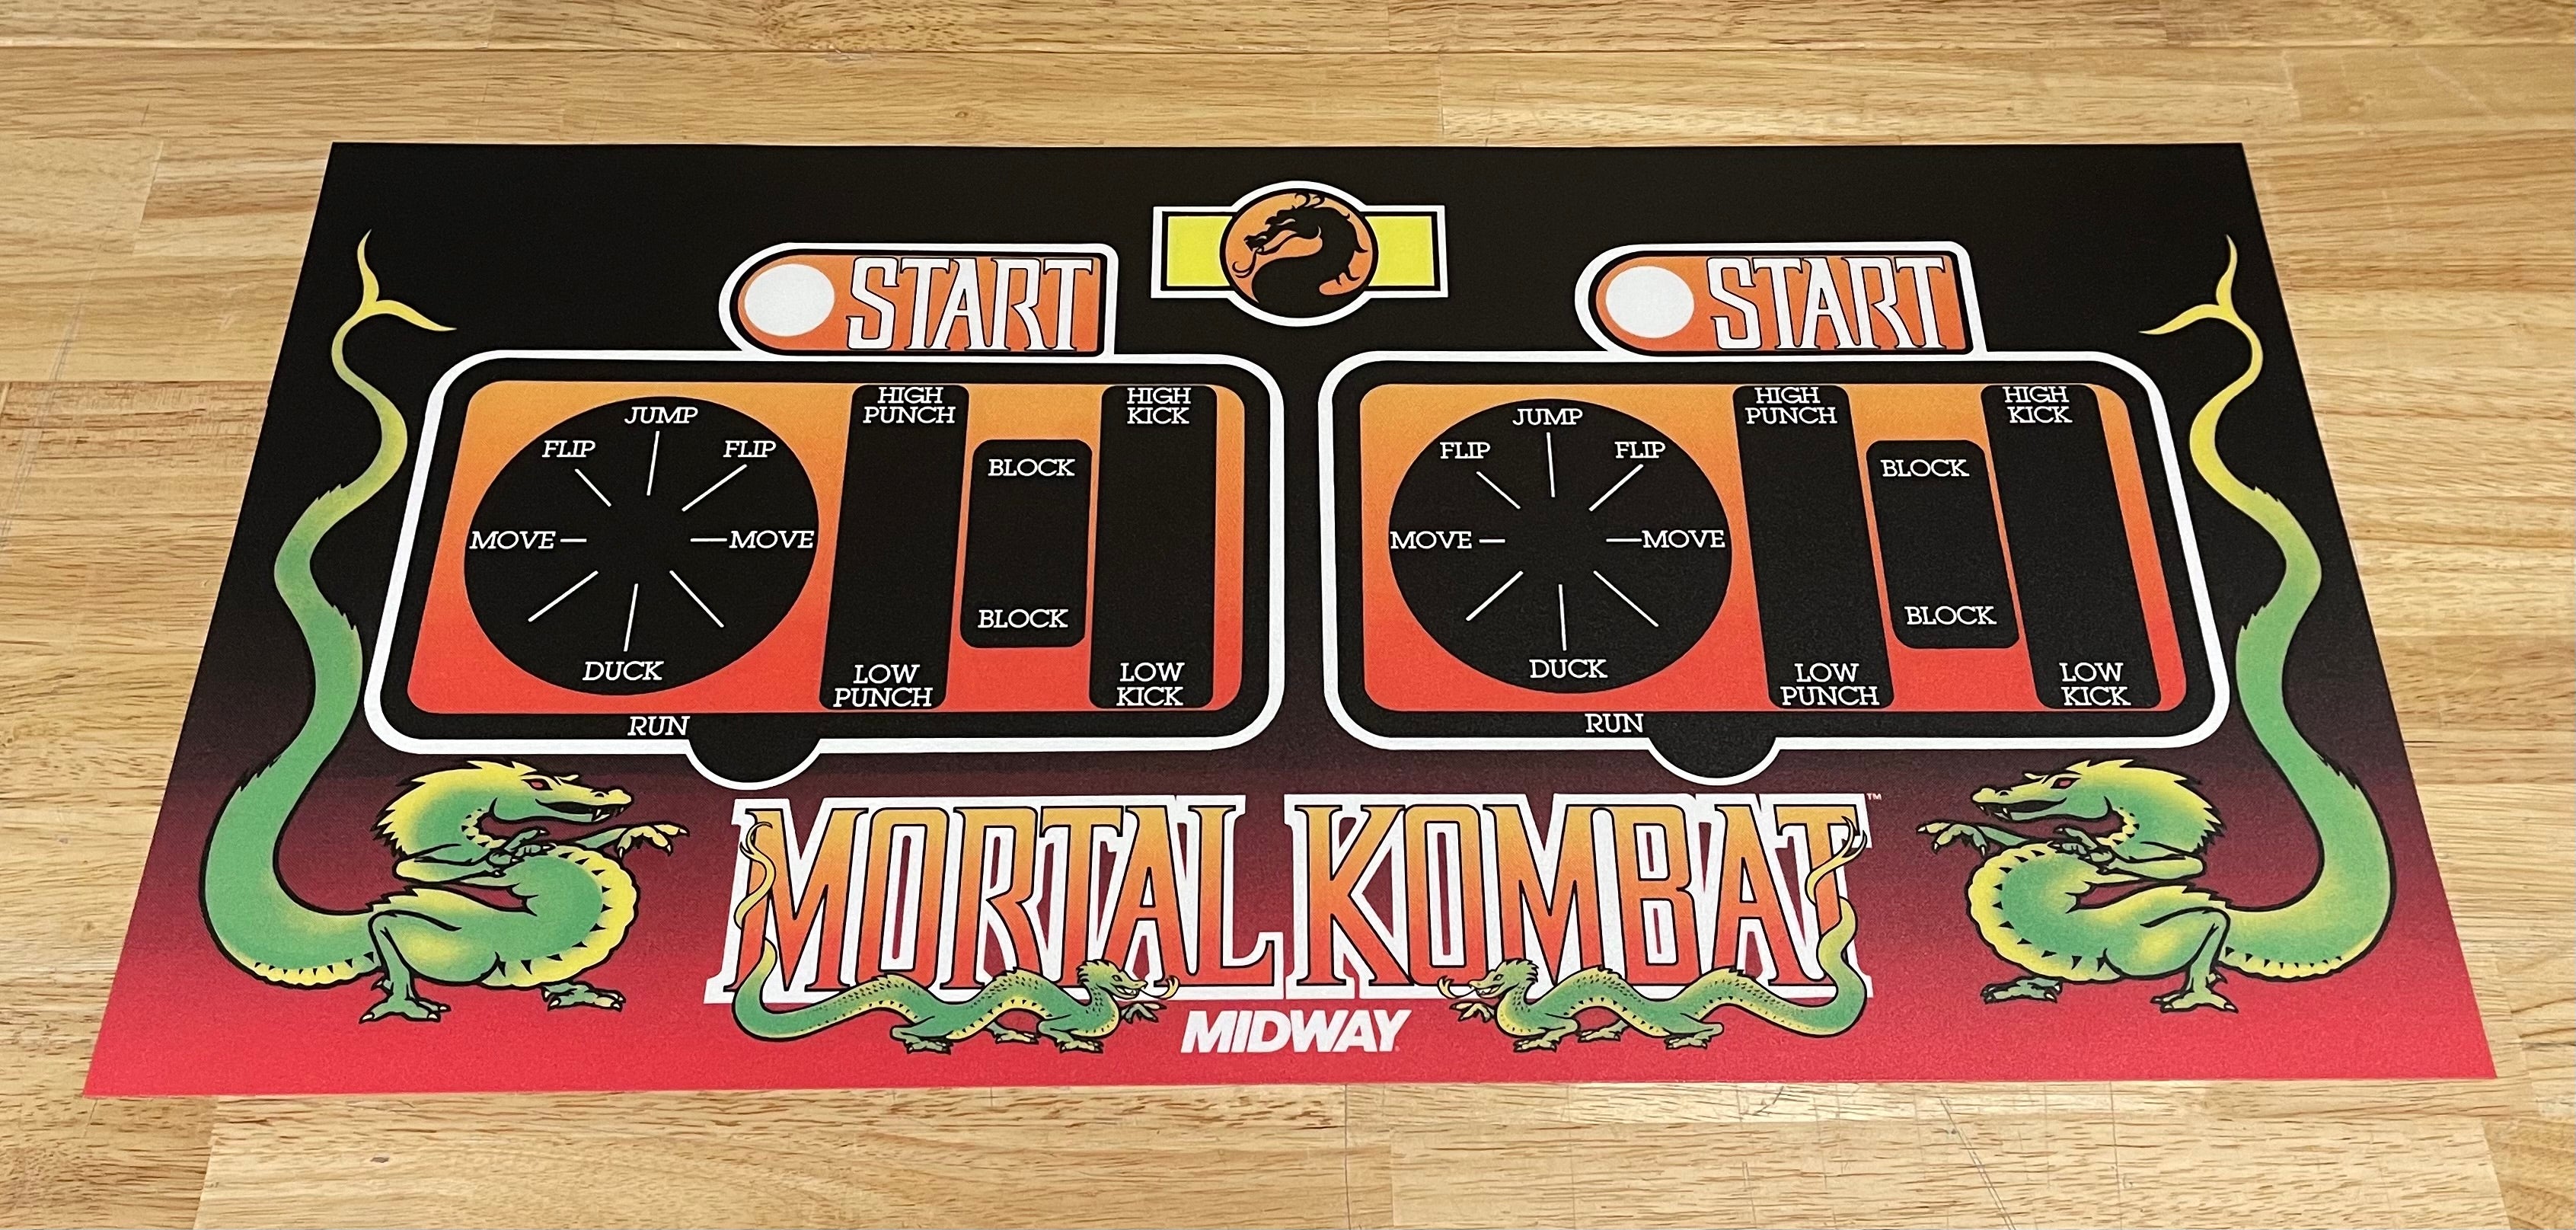 Mortal Kombat CPO con botón Ejecutar